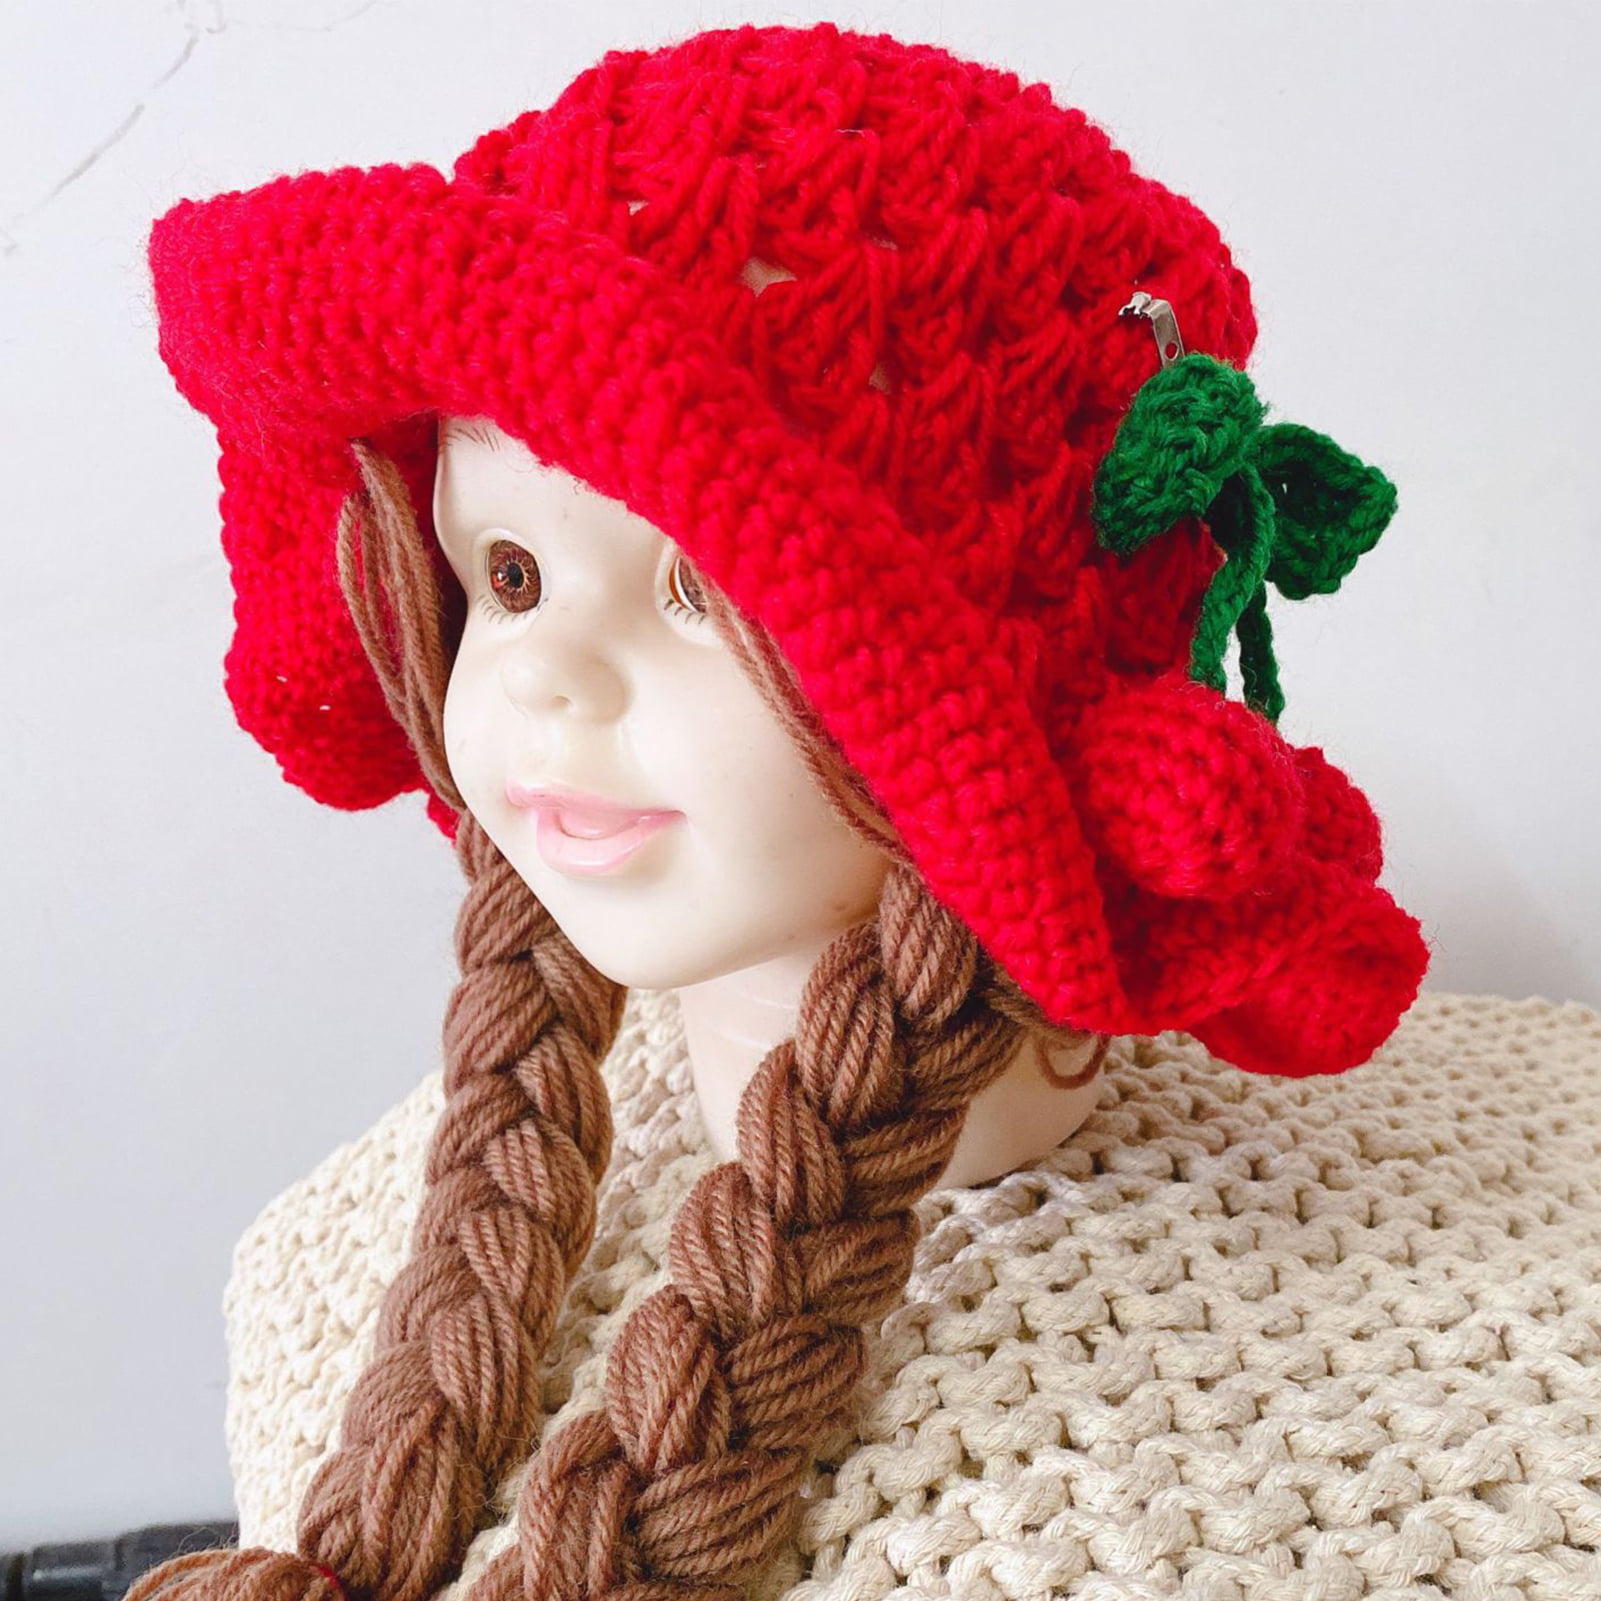 Travelwant Baby Wig Hat Creative Keep Warm Braid Design Winter Beanie Hat Hand Crochet Yarn Hats for Children, Infant Boy's, Size: One size, Pink